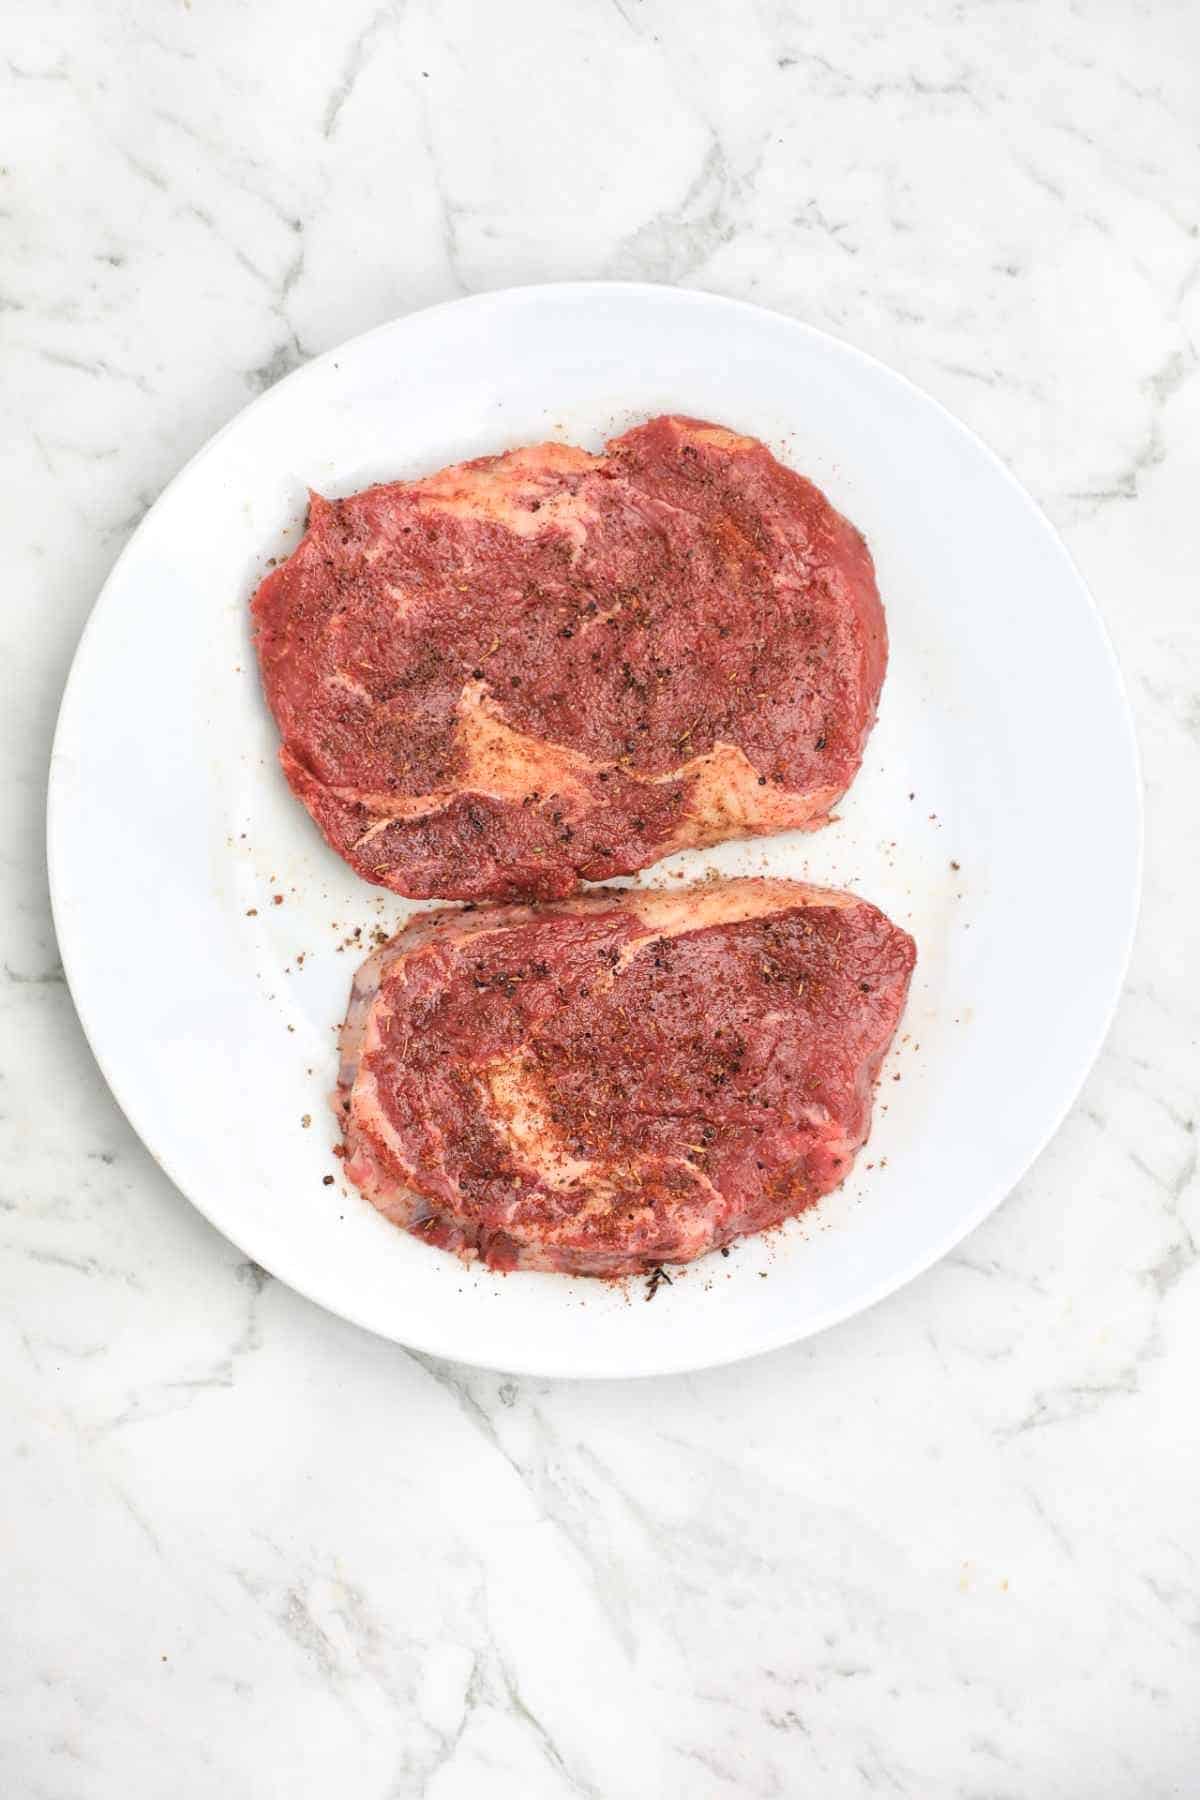 seasoned steaks on a plate.